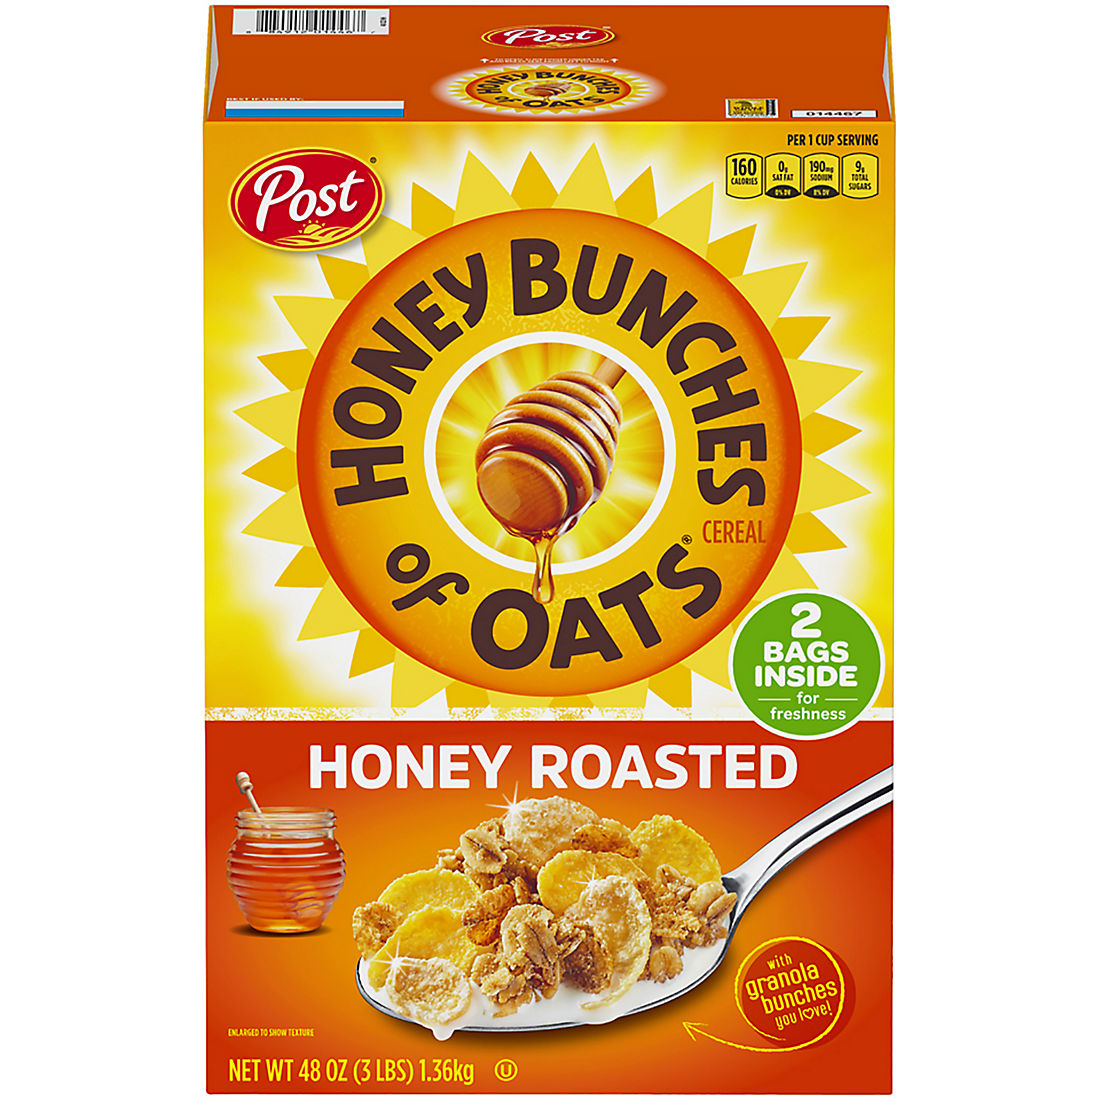 Honey Nut Cheerios (48 oz., 2 pk.)